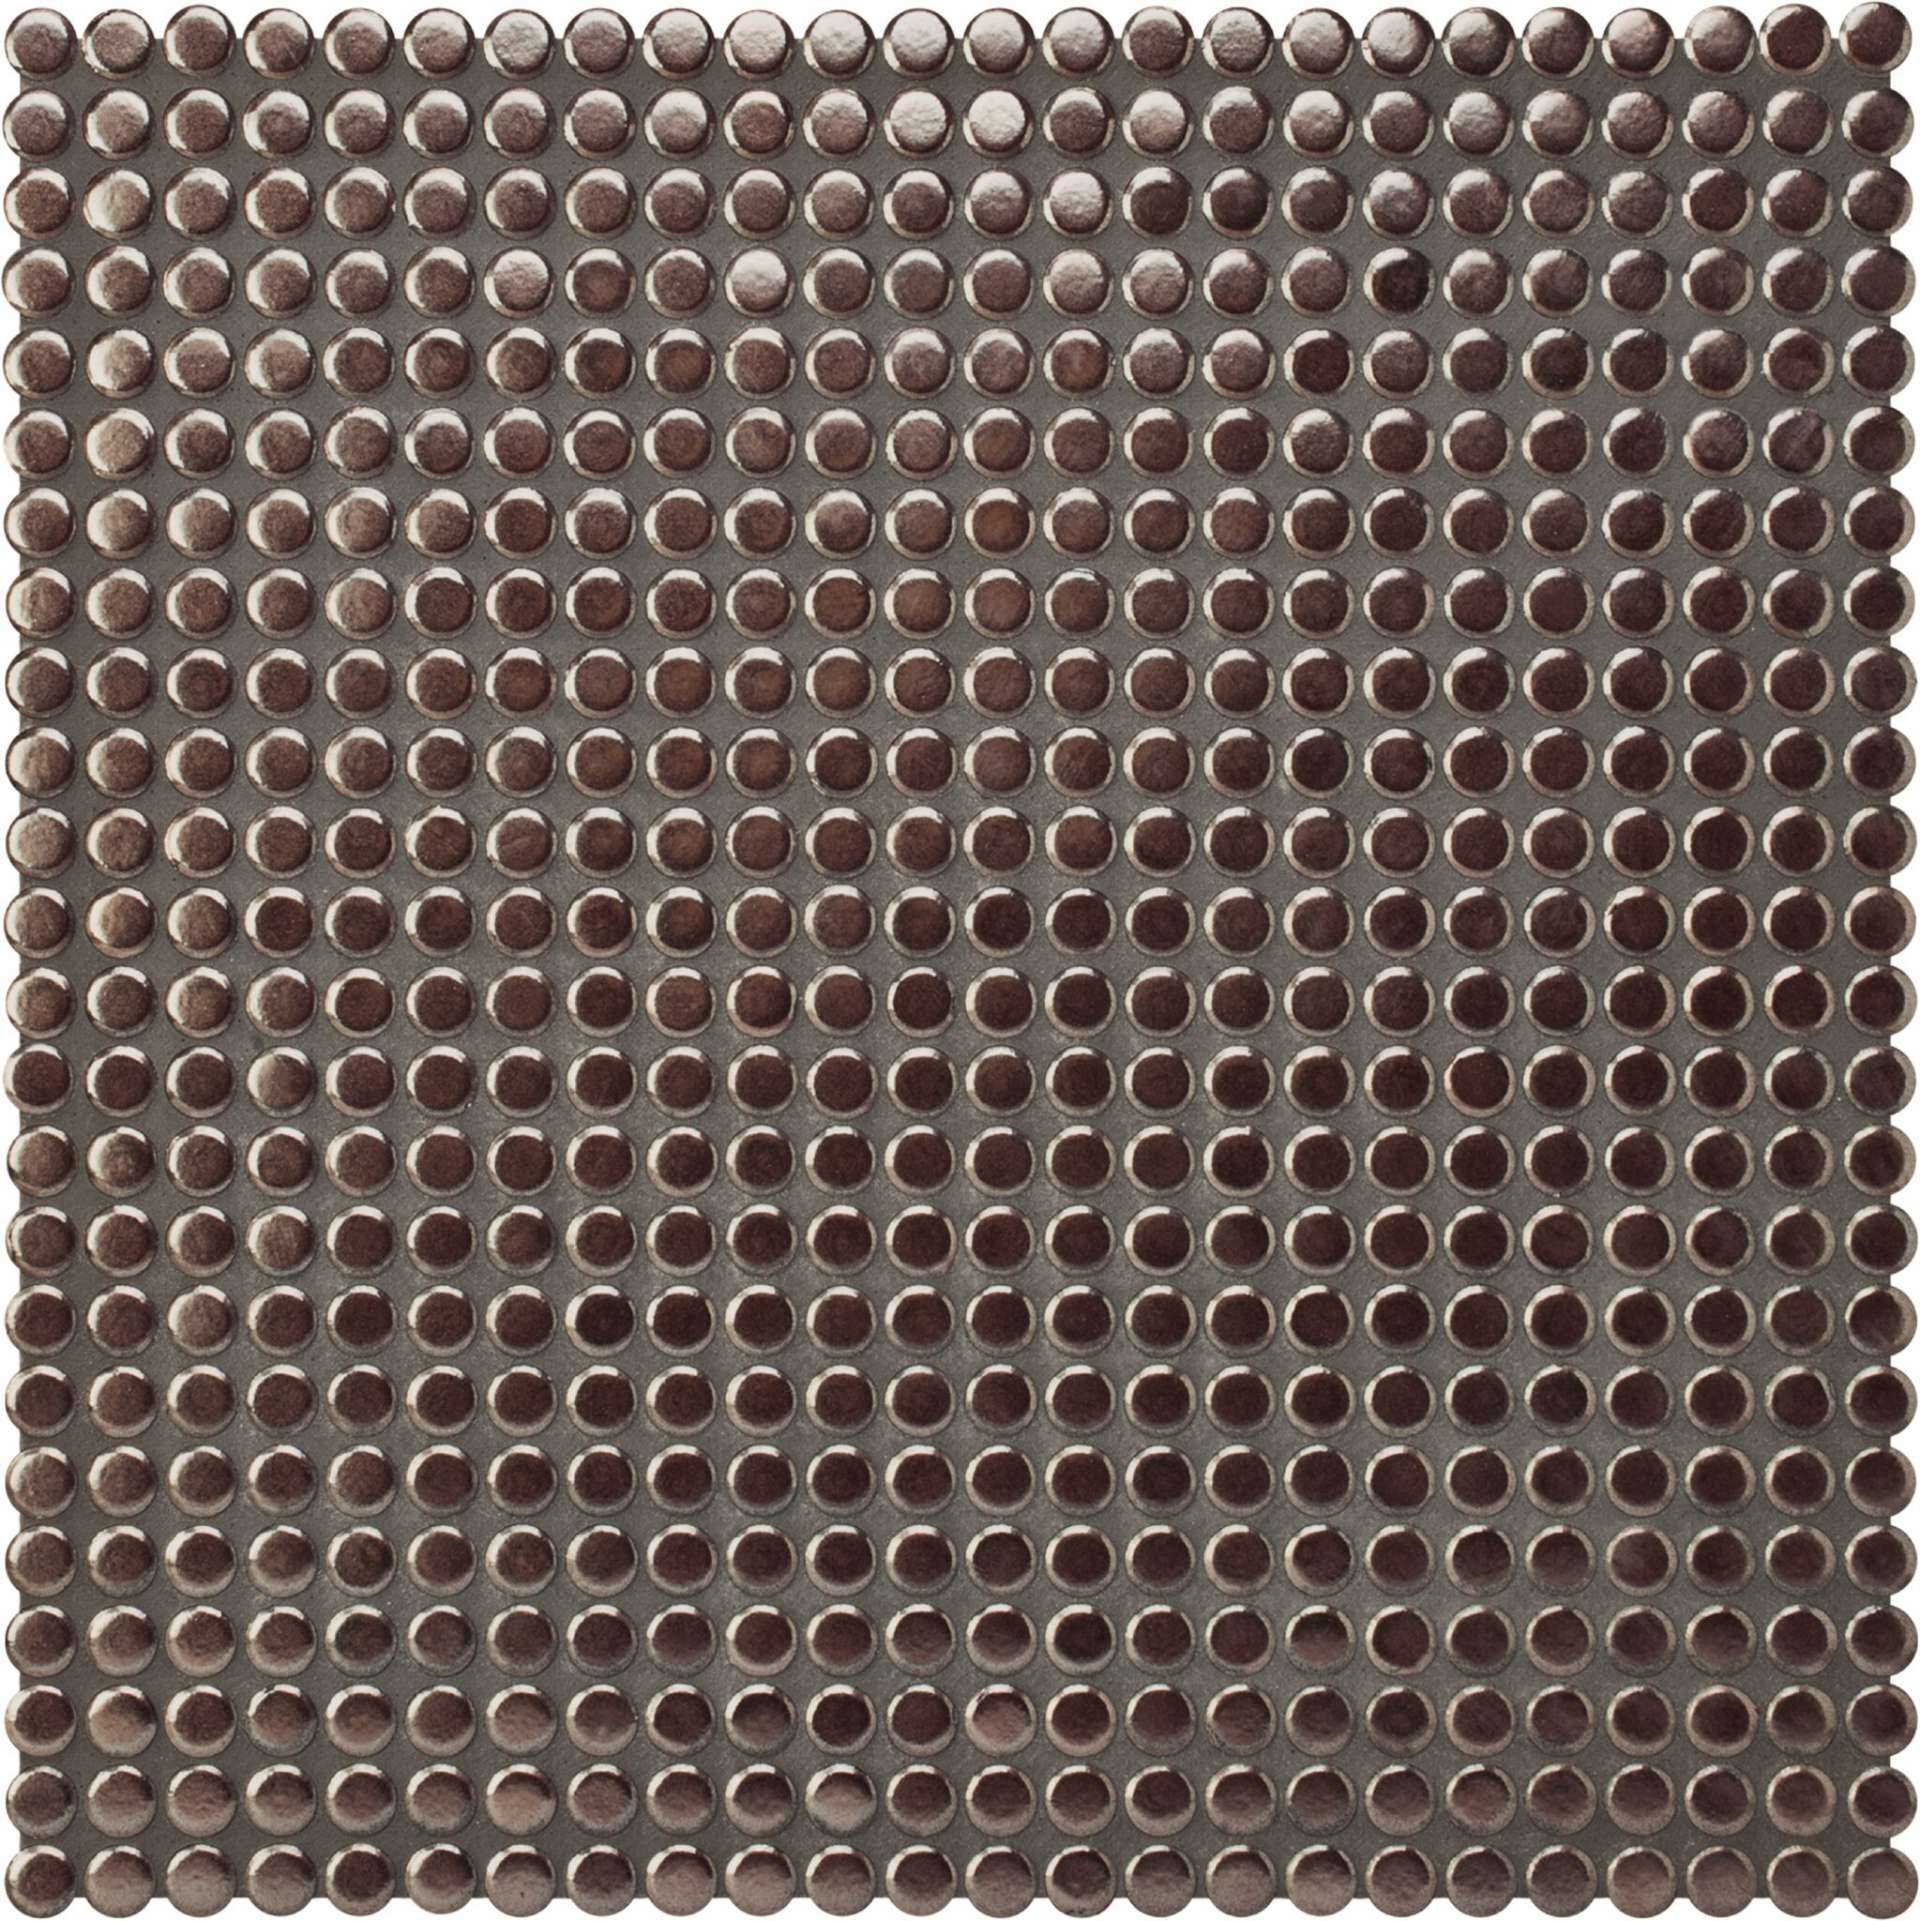 Мозаика Jasba Loop Bronze-Metallic 40014-44, цвет металлик, поверхность глянцевая, круг и овал, 316x316